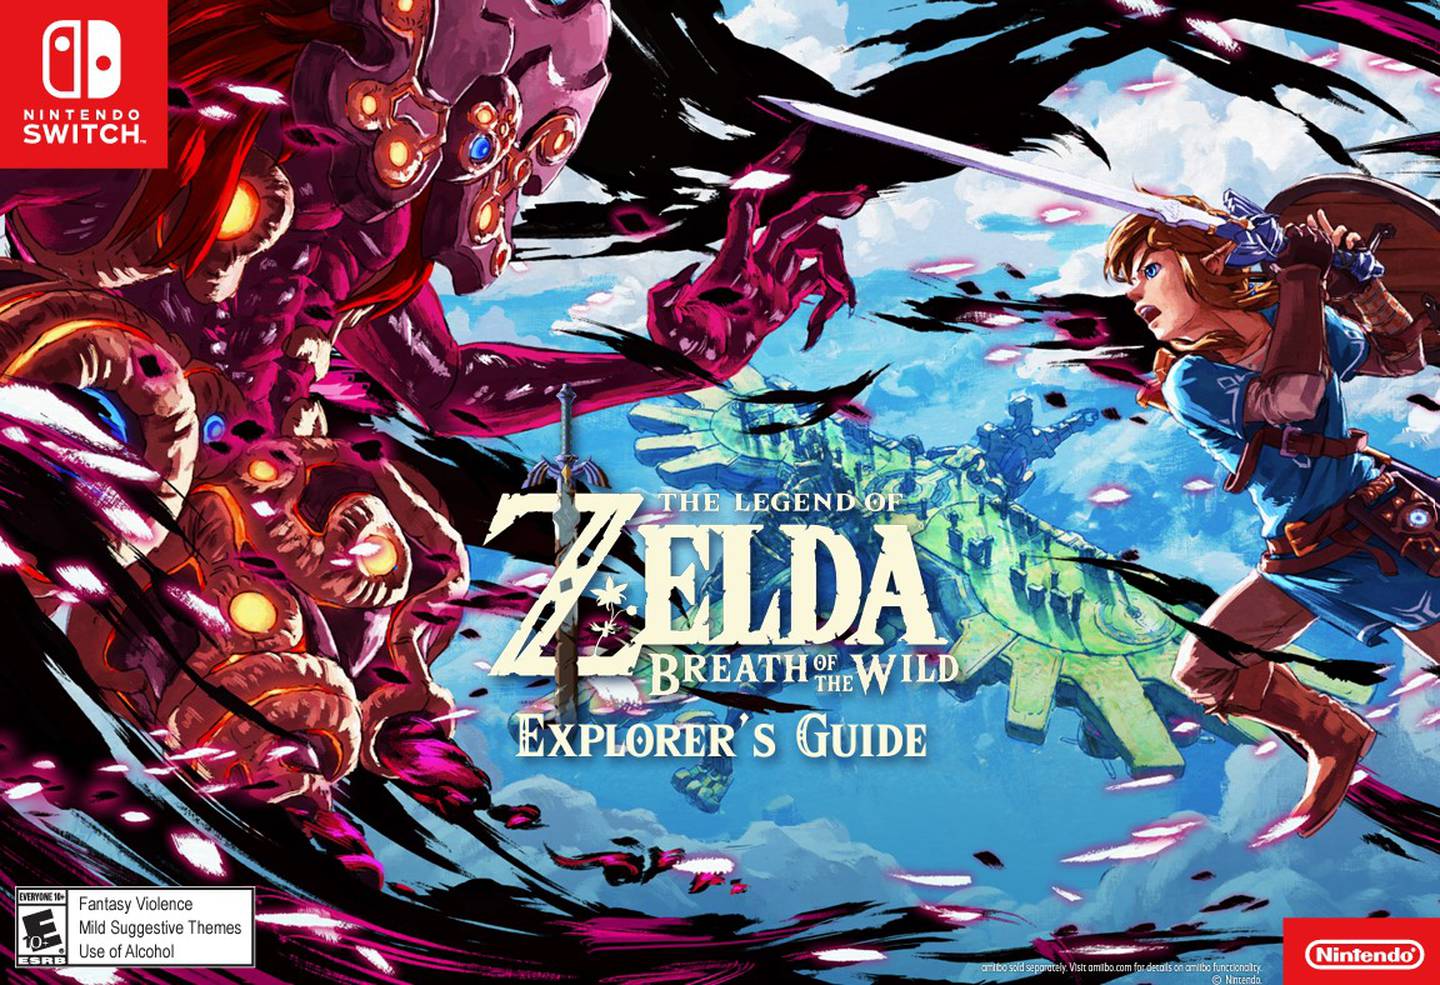 The Legend of Zelda: Breath of the Wild Explorer’s Guide